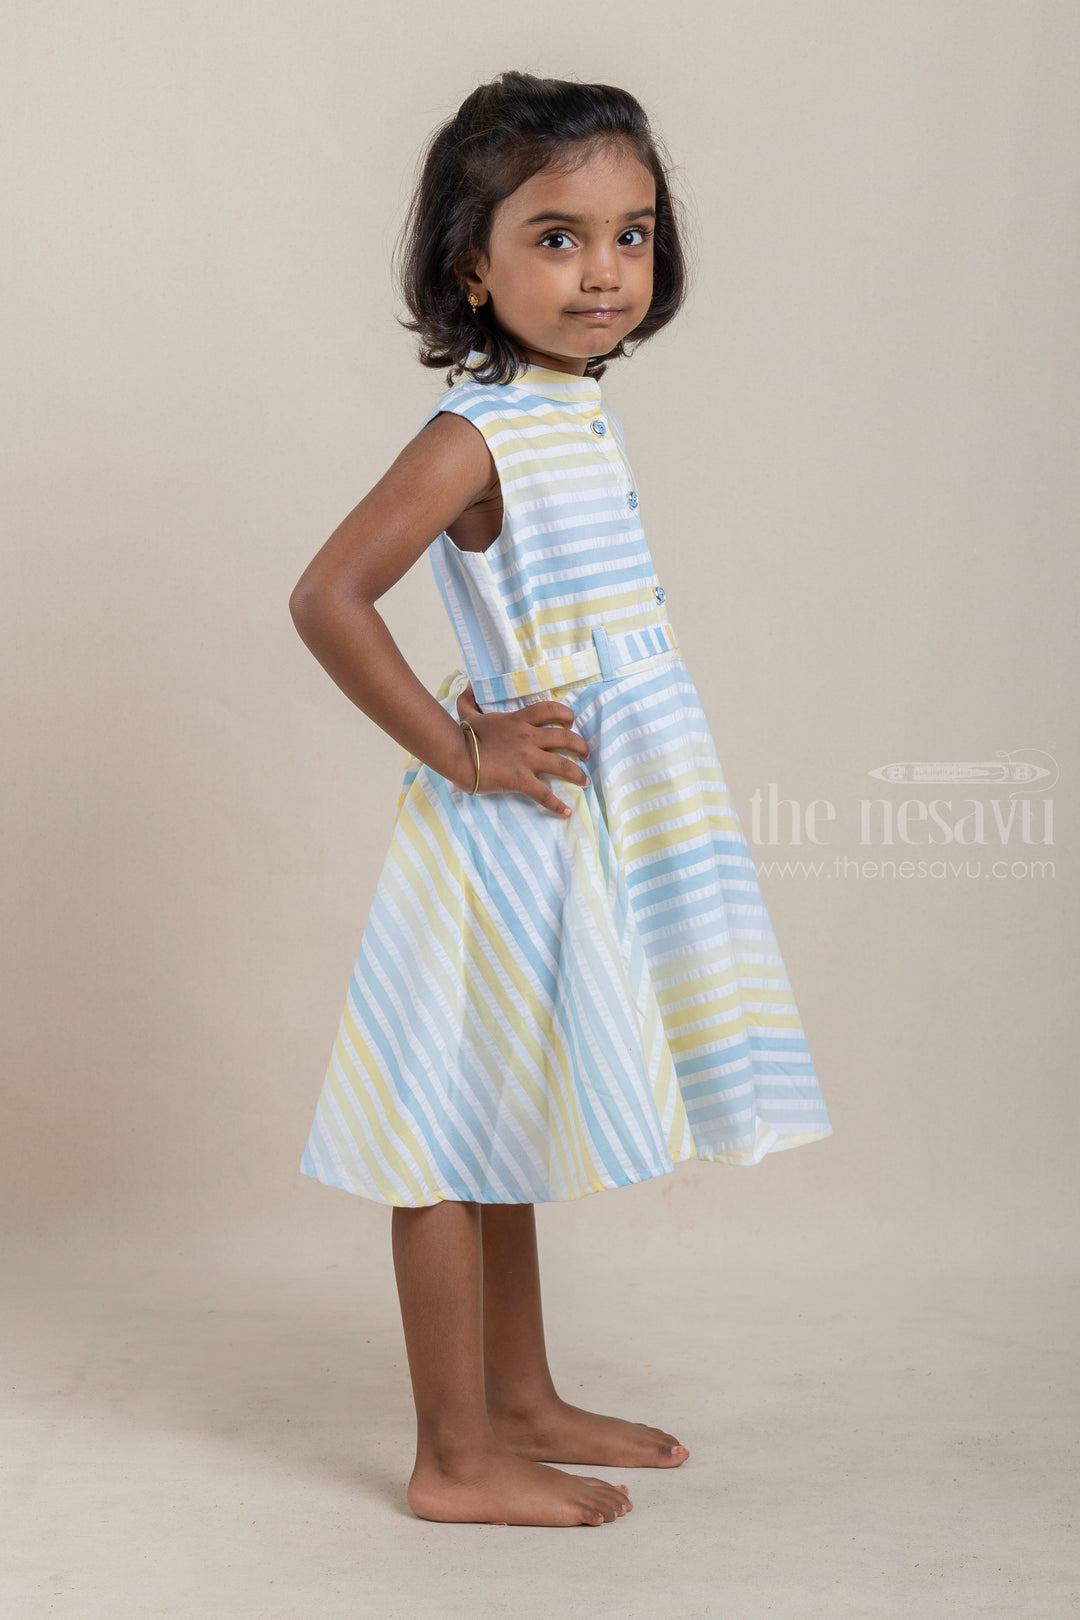 The Nesavu Frocks & Dresses Striped Pattern Blue and Yellow Cotton Frock for Girls psr silks Nesavu